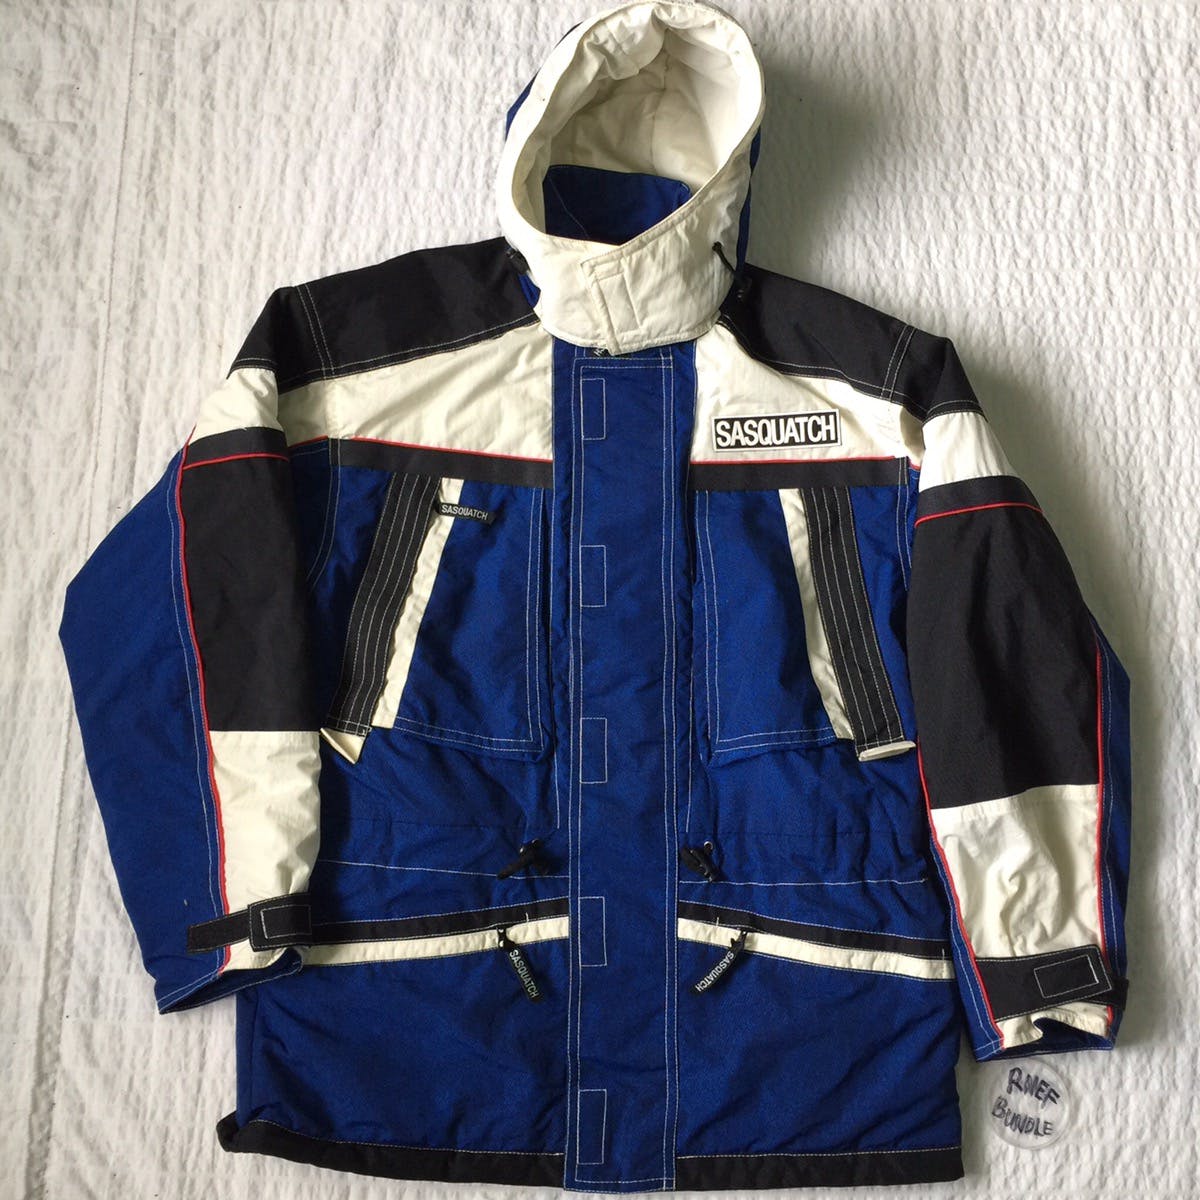 Sasquatch Japanese brand jacket hoodie - 15